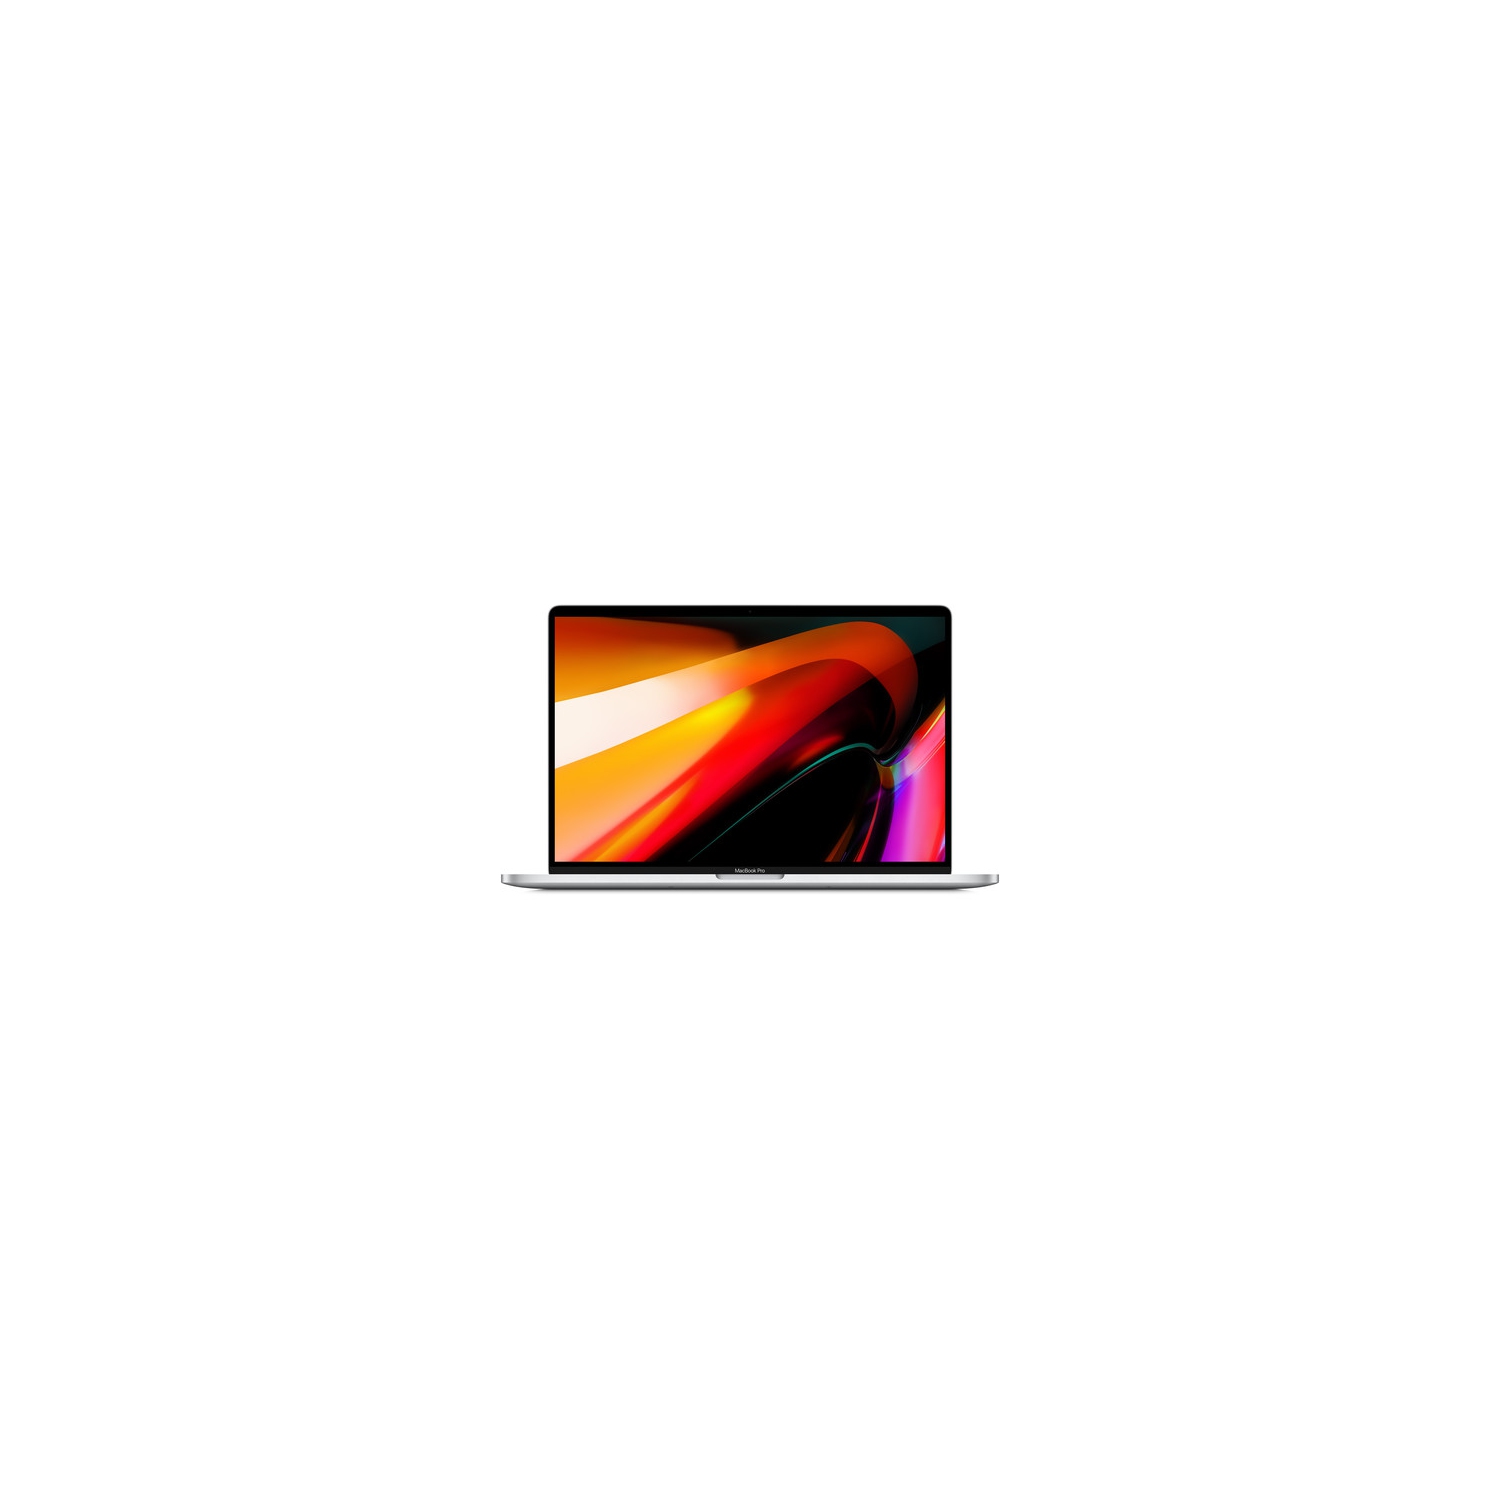 SILVER Macbook Pro 16.0" MVVL2LL/A (2019) 2.6 GHZ Core i7 /16 GB /512 GB SSD - Refurbished Mint Condition